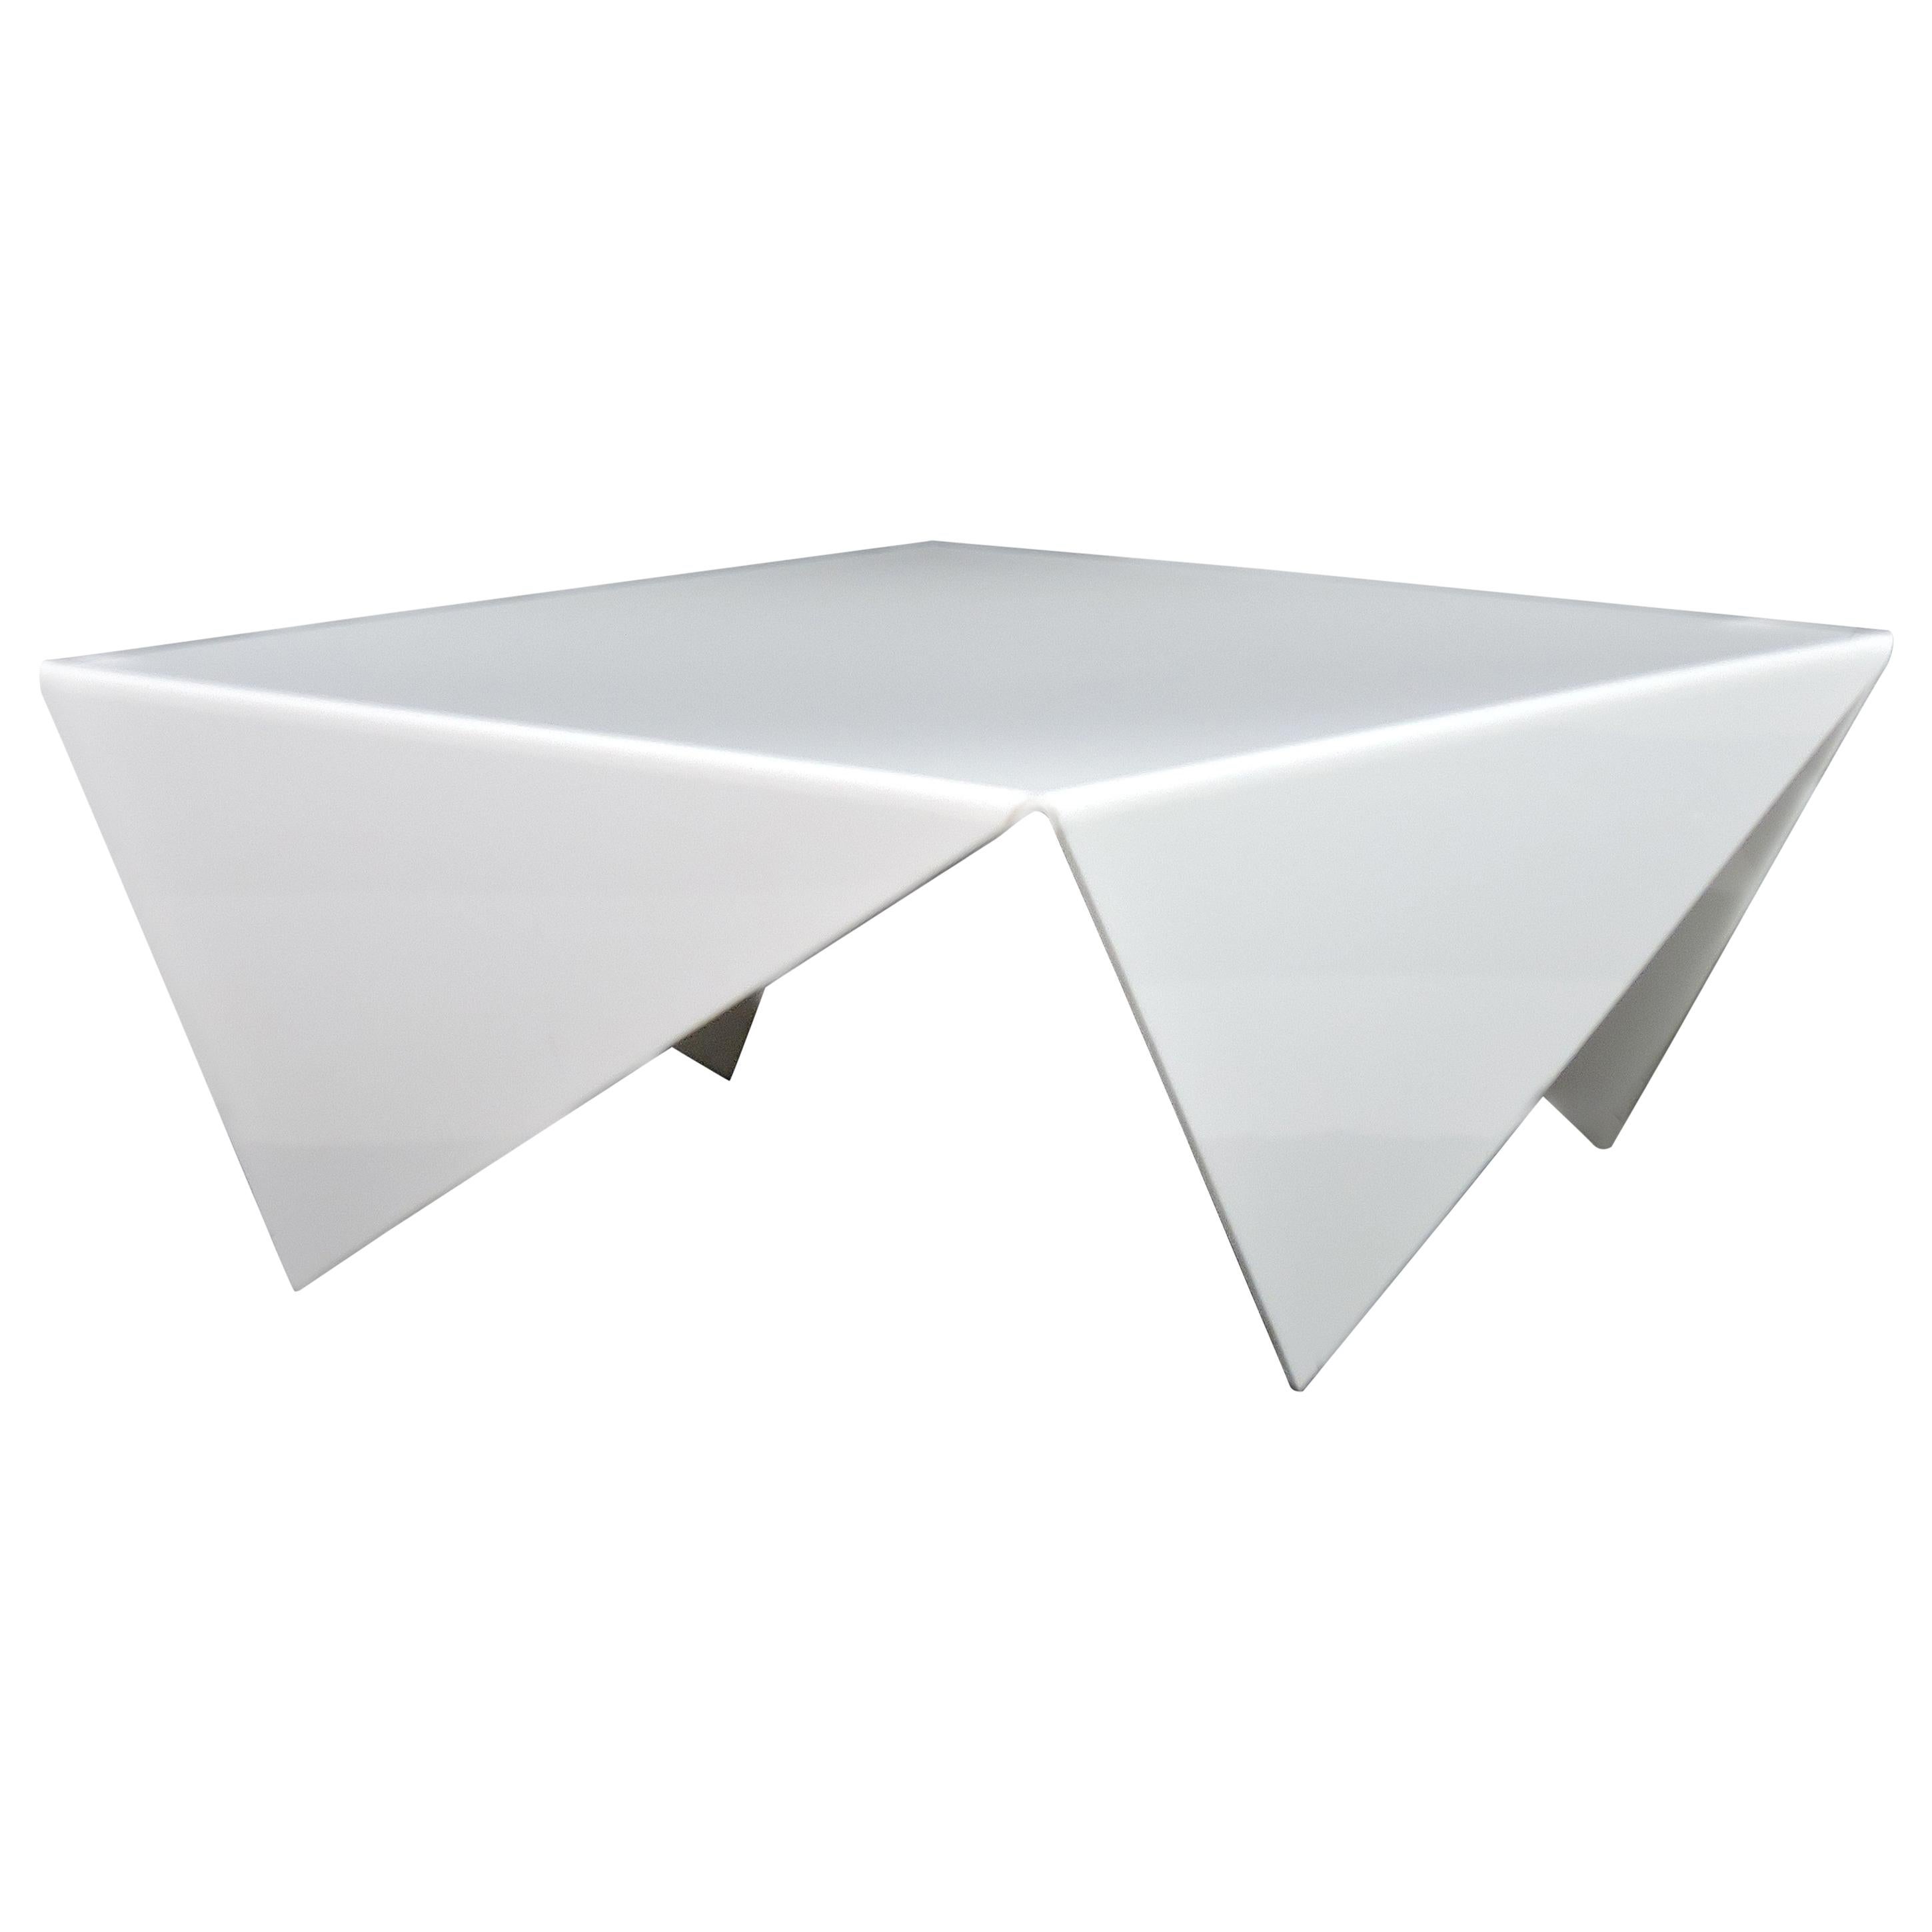 Bertin France Mouchoir Style Mid-Century Modern White Acrylic Coffee Table